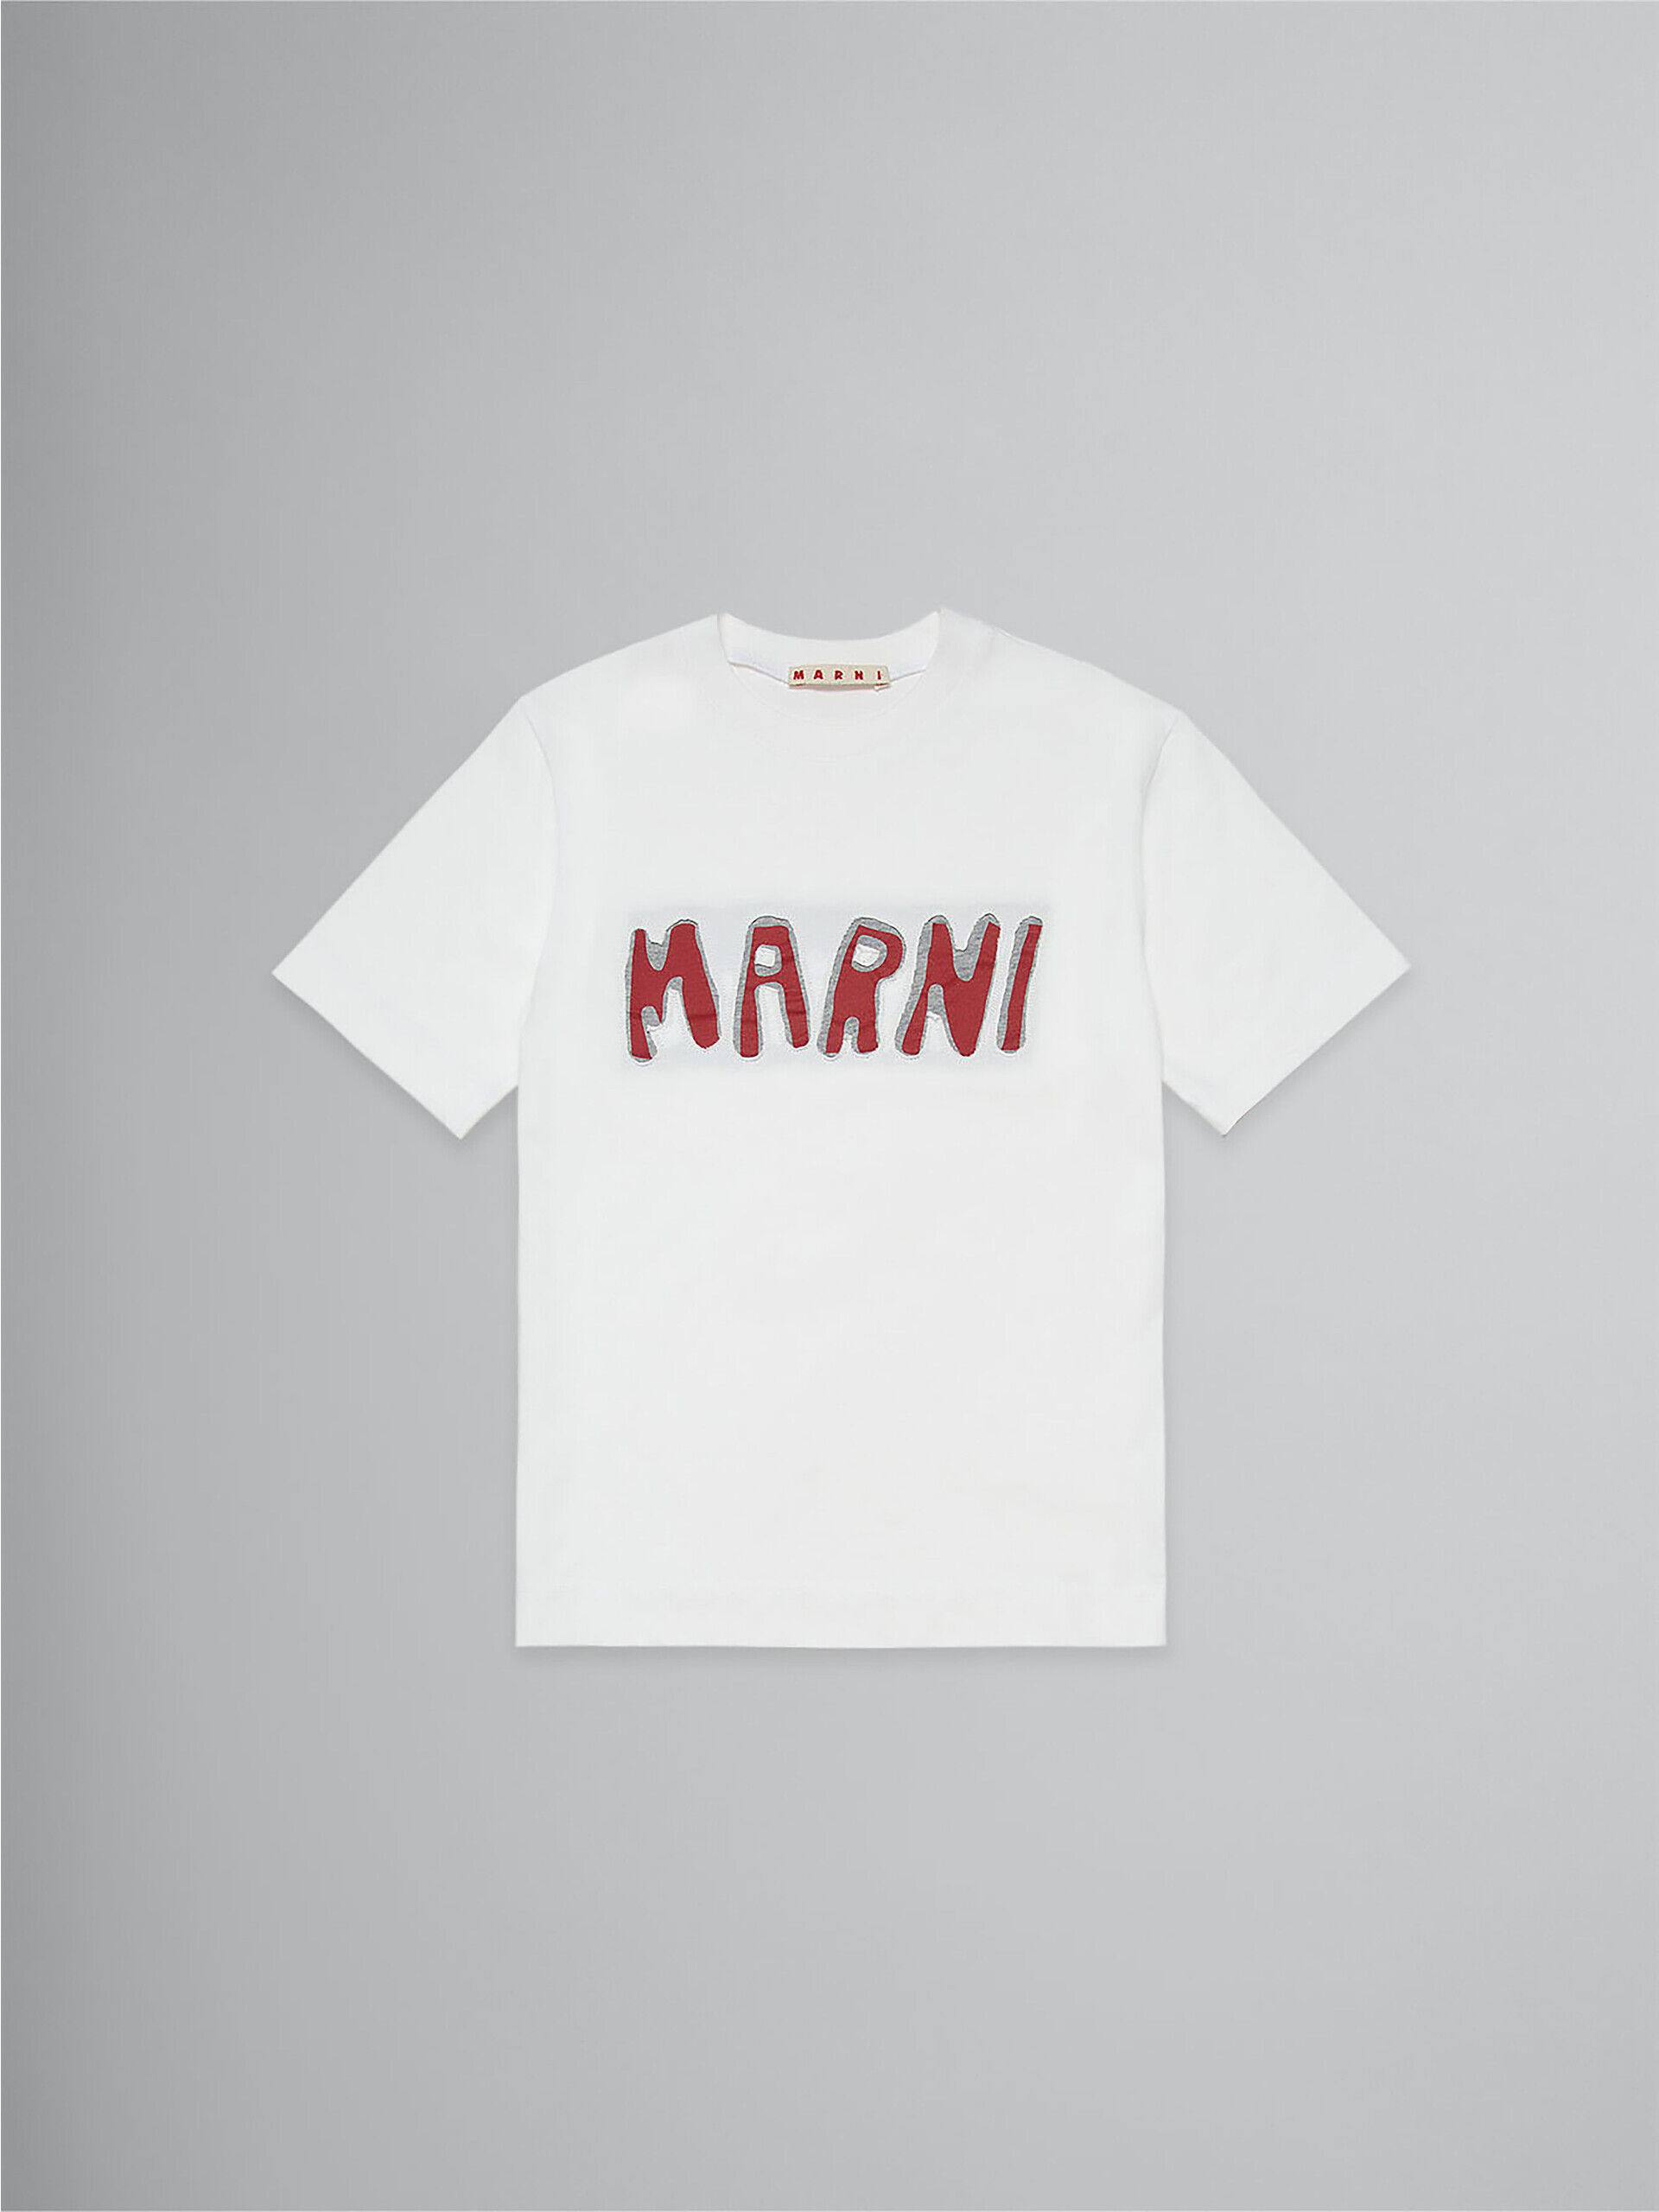 White jersey T-shirt with logo | Marni